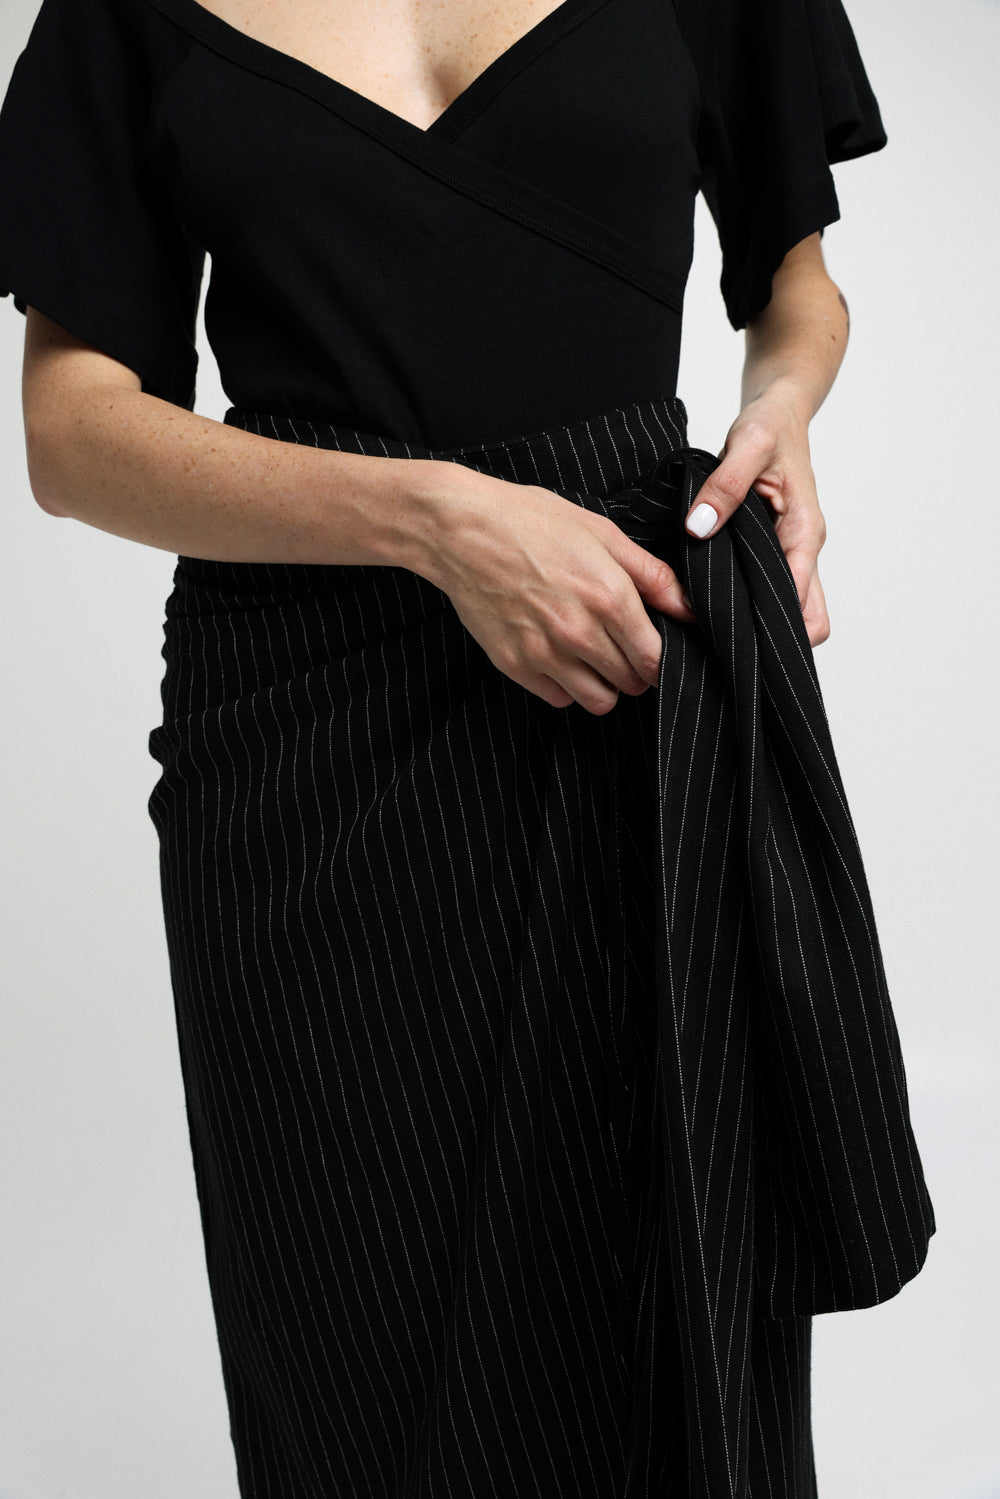 EE Black & White Stripes Skirt חצאית מעטפת עם קשירה